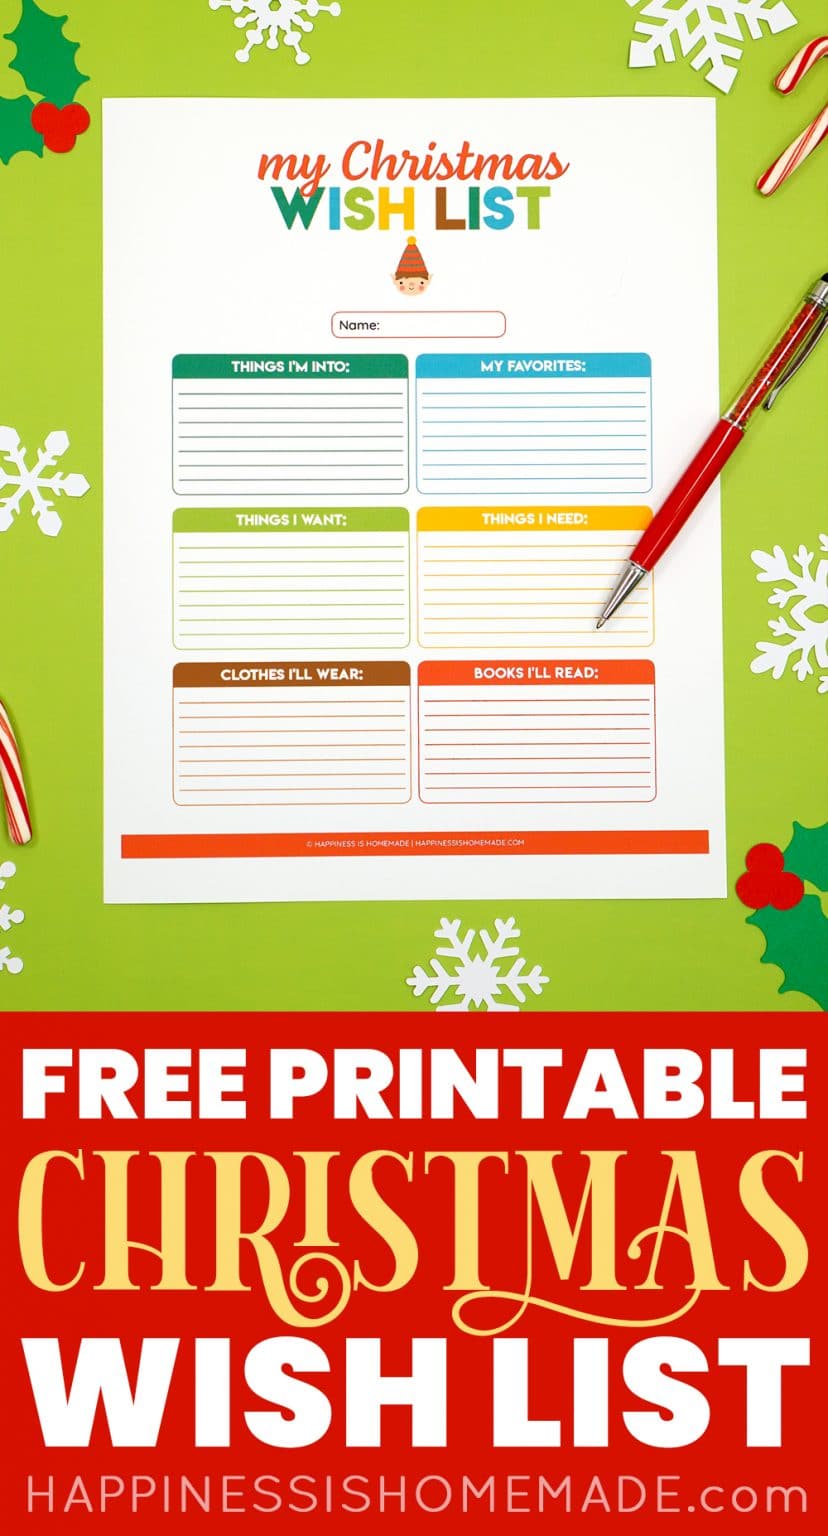 Printable Christmas Wish List for Kids & Adults - Happiness is Homemade